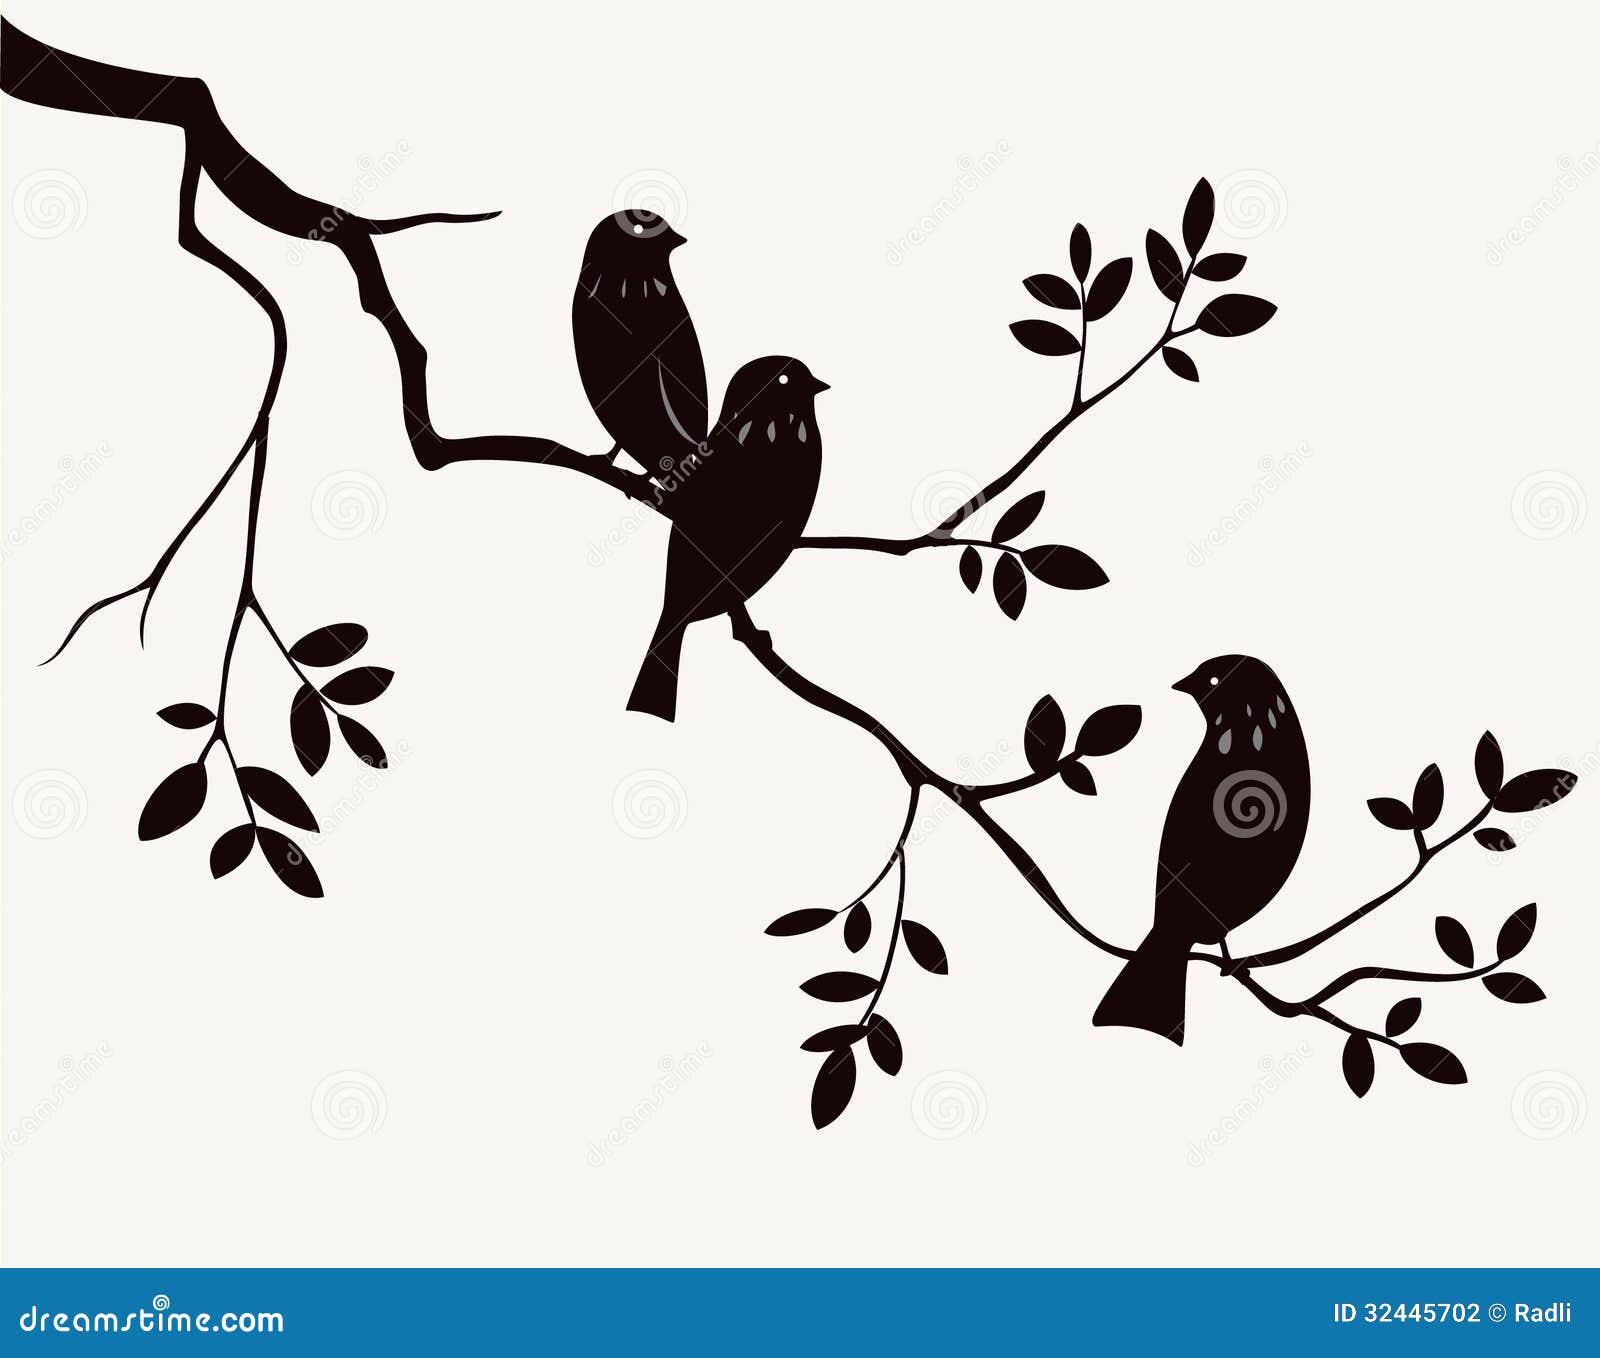 birds on twig